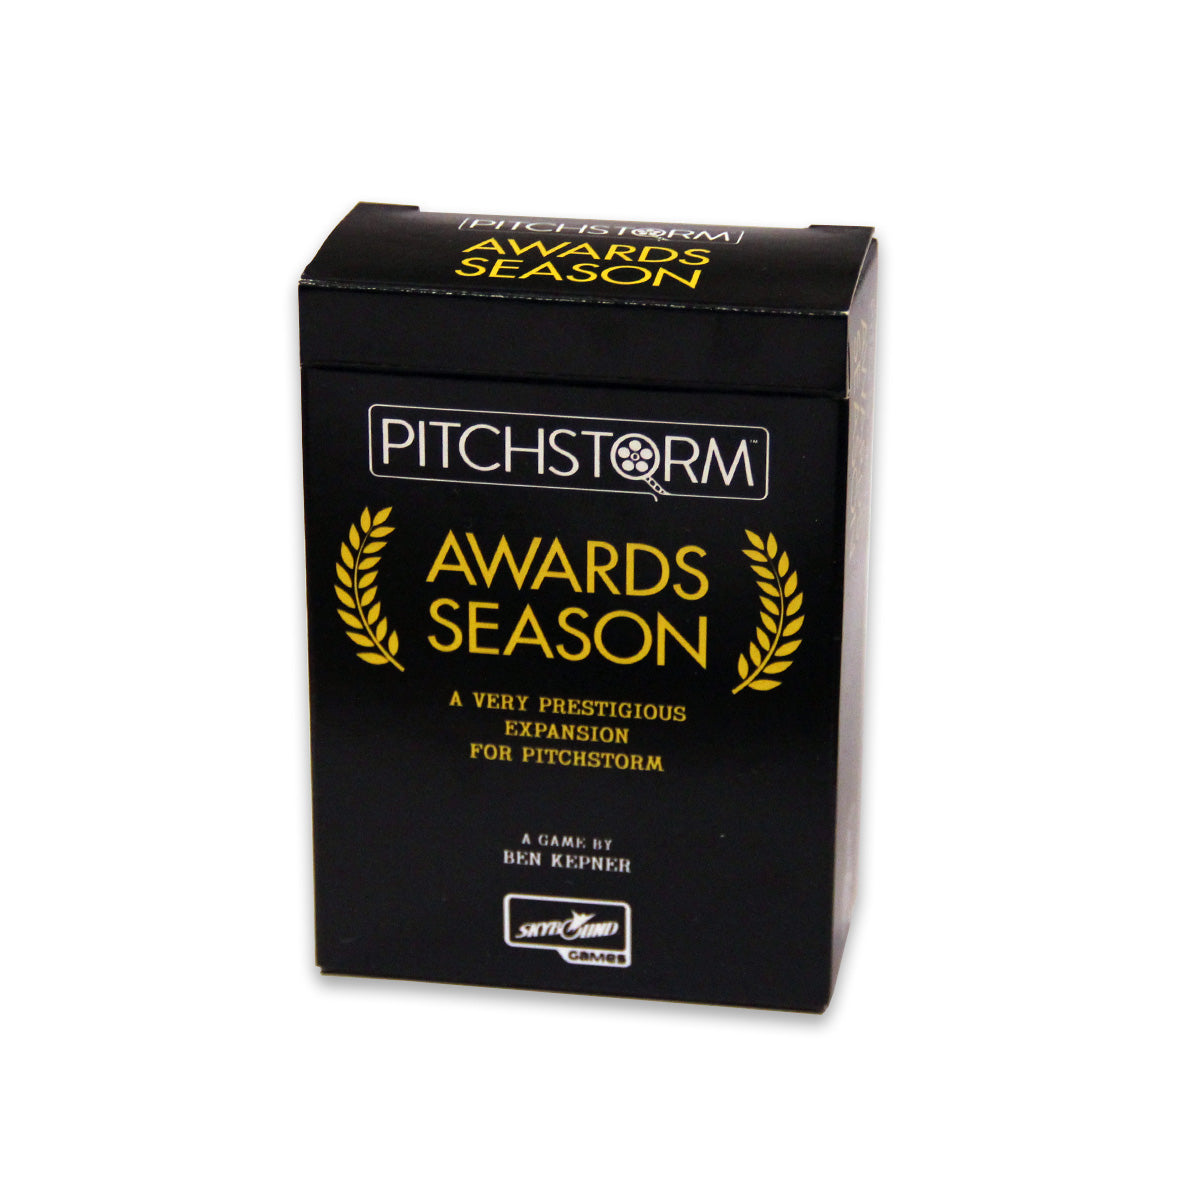 PITCHSTORM Awards Season: A Very Prestigious Expansion